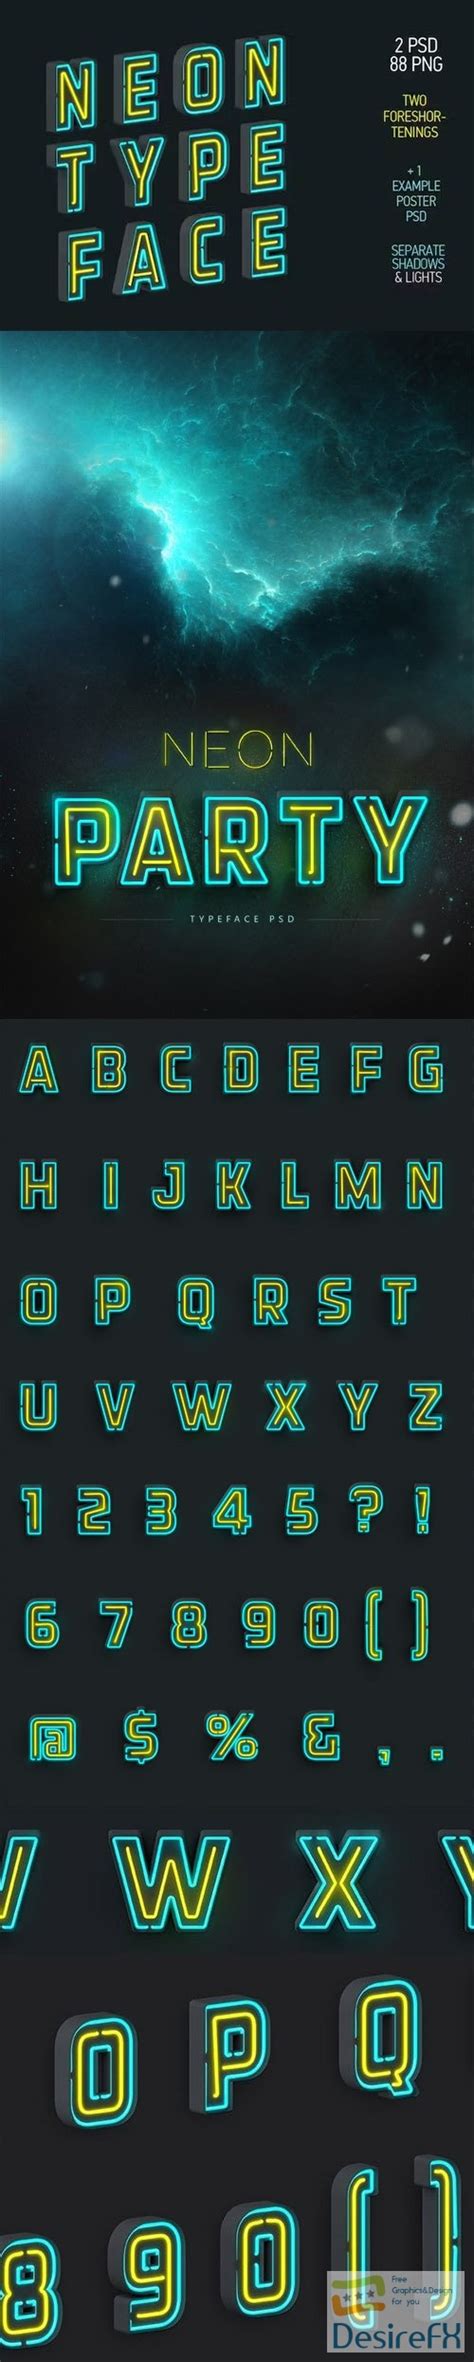 Download Neon Typeface Psd Png Templates Desirefxcom